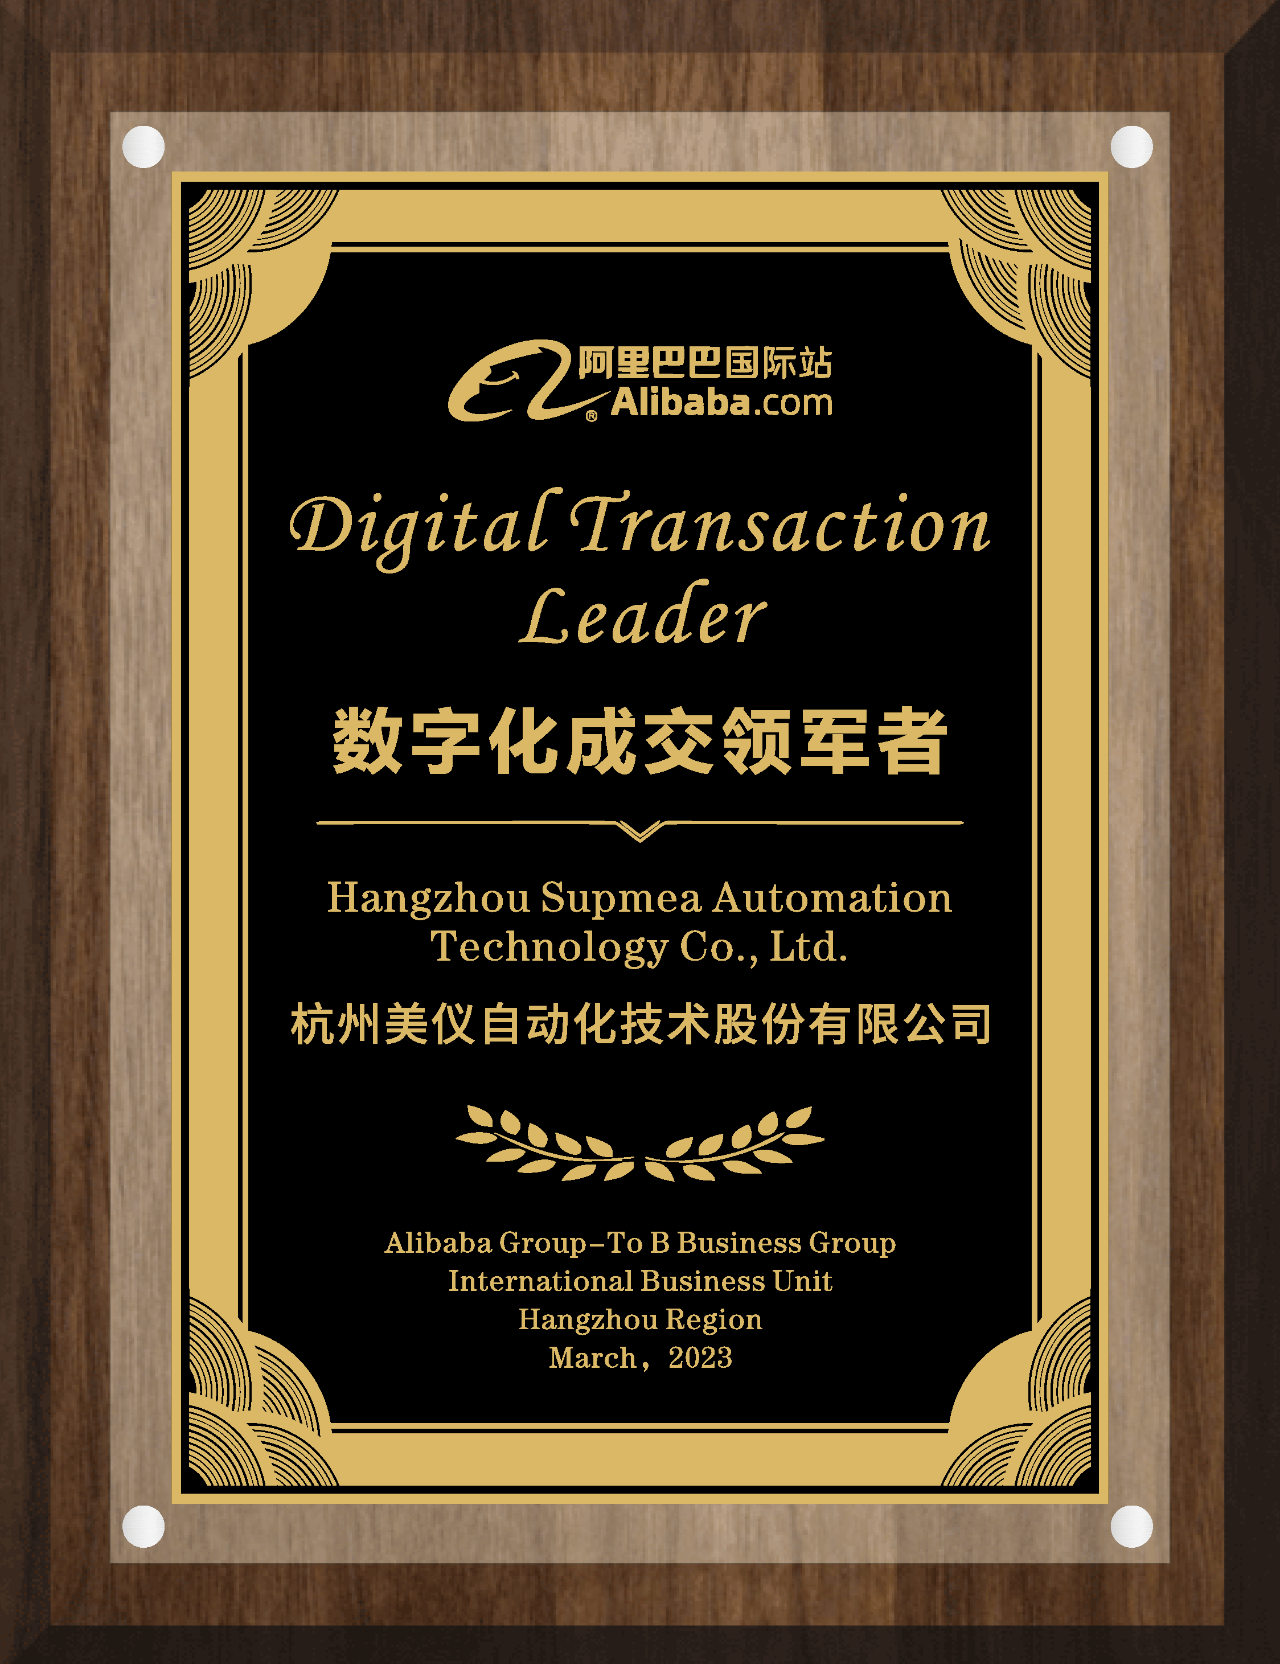 Supmea receives a digital award